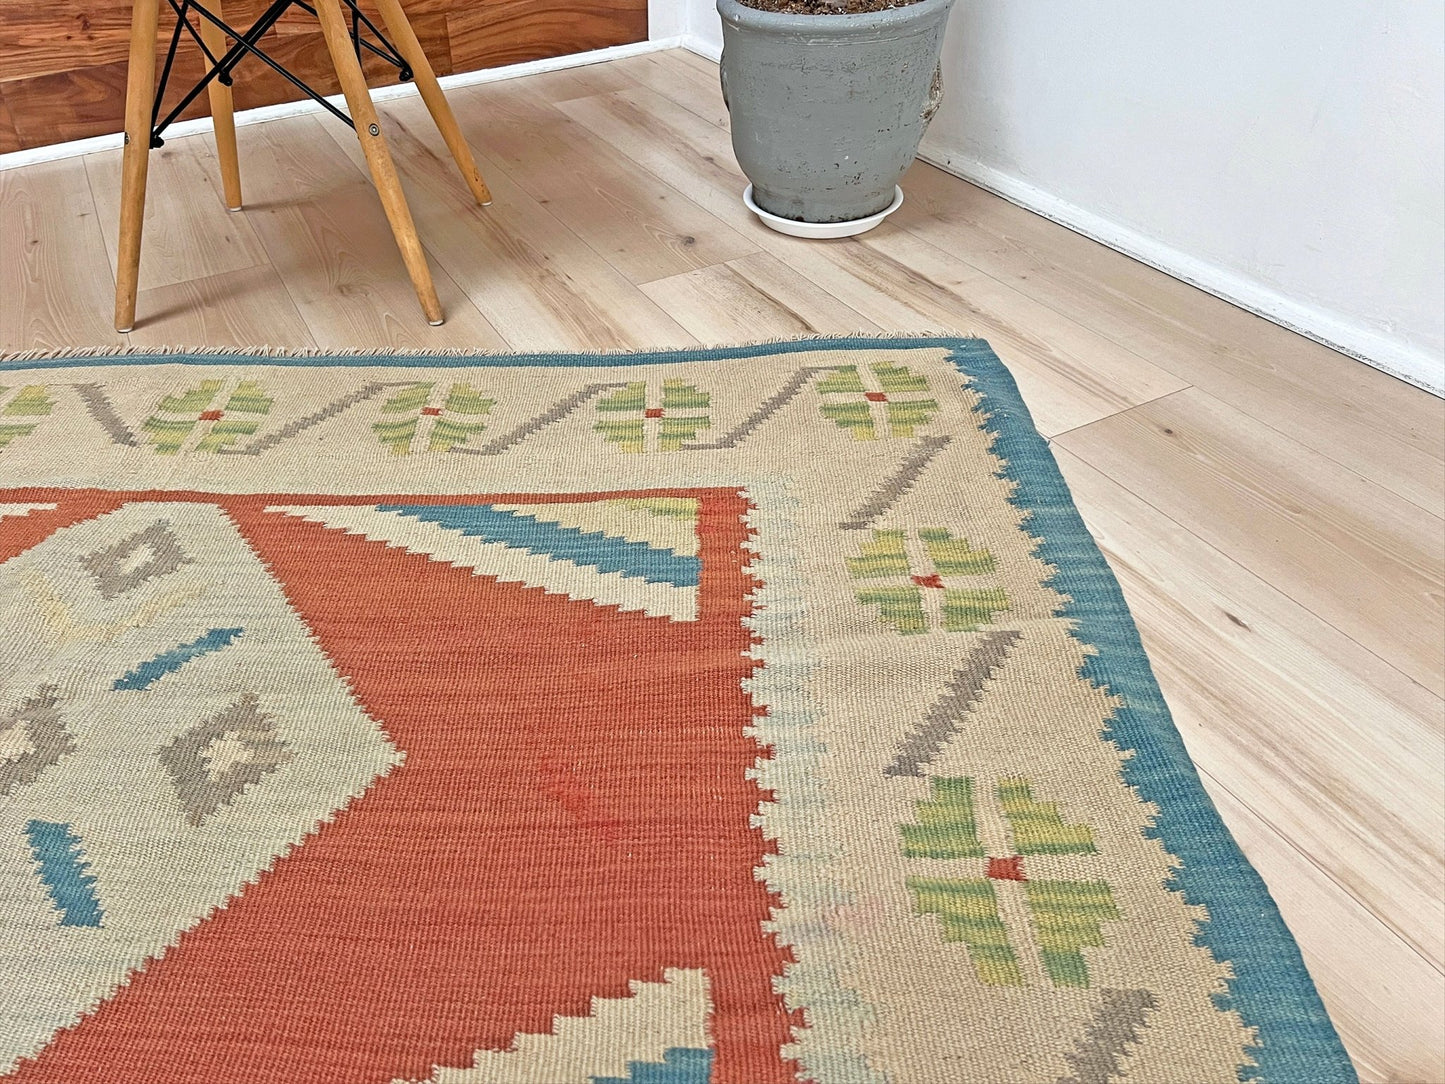 Turkish kilim rug shop san francisco bay area. Flatweave wool handmade rug for living room bedroom nursery kitchen dining. Buy turkish kilim online free shipping